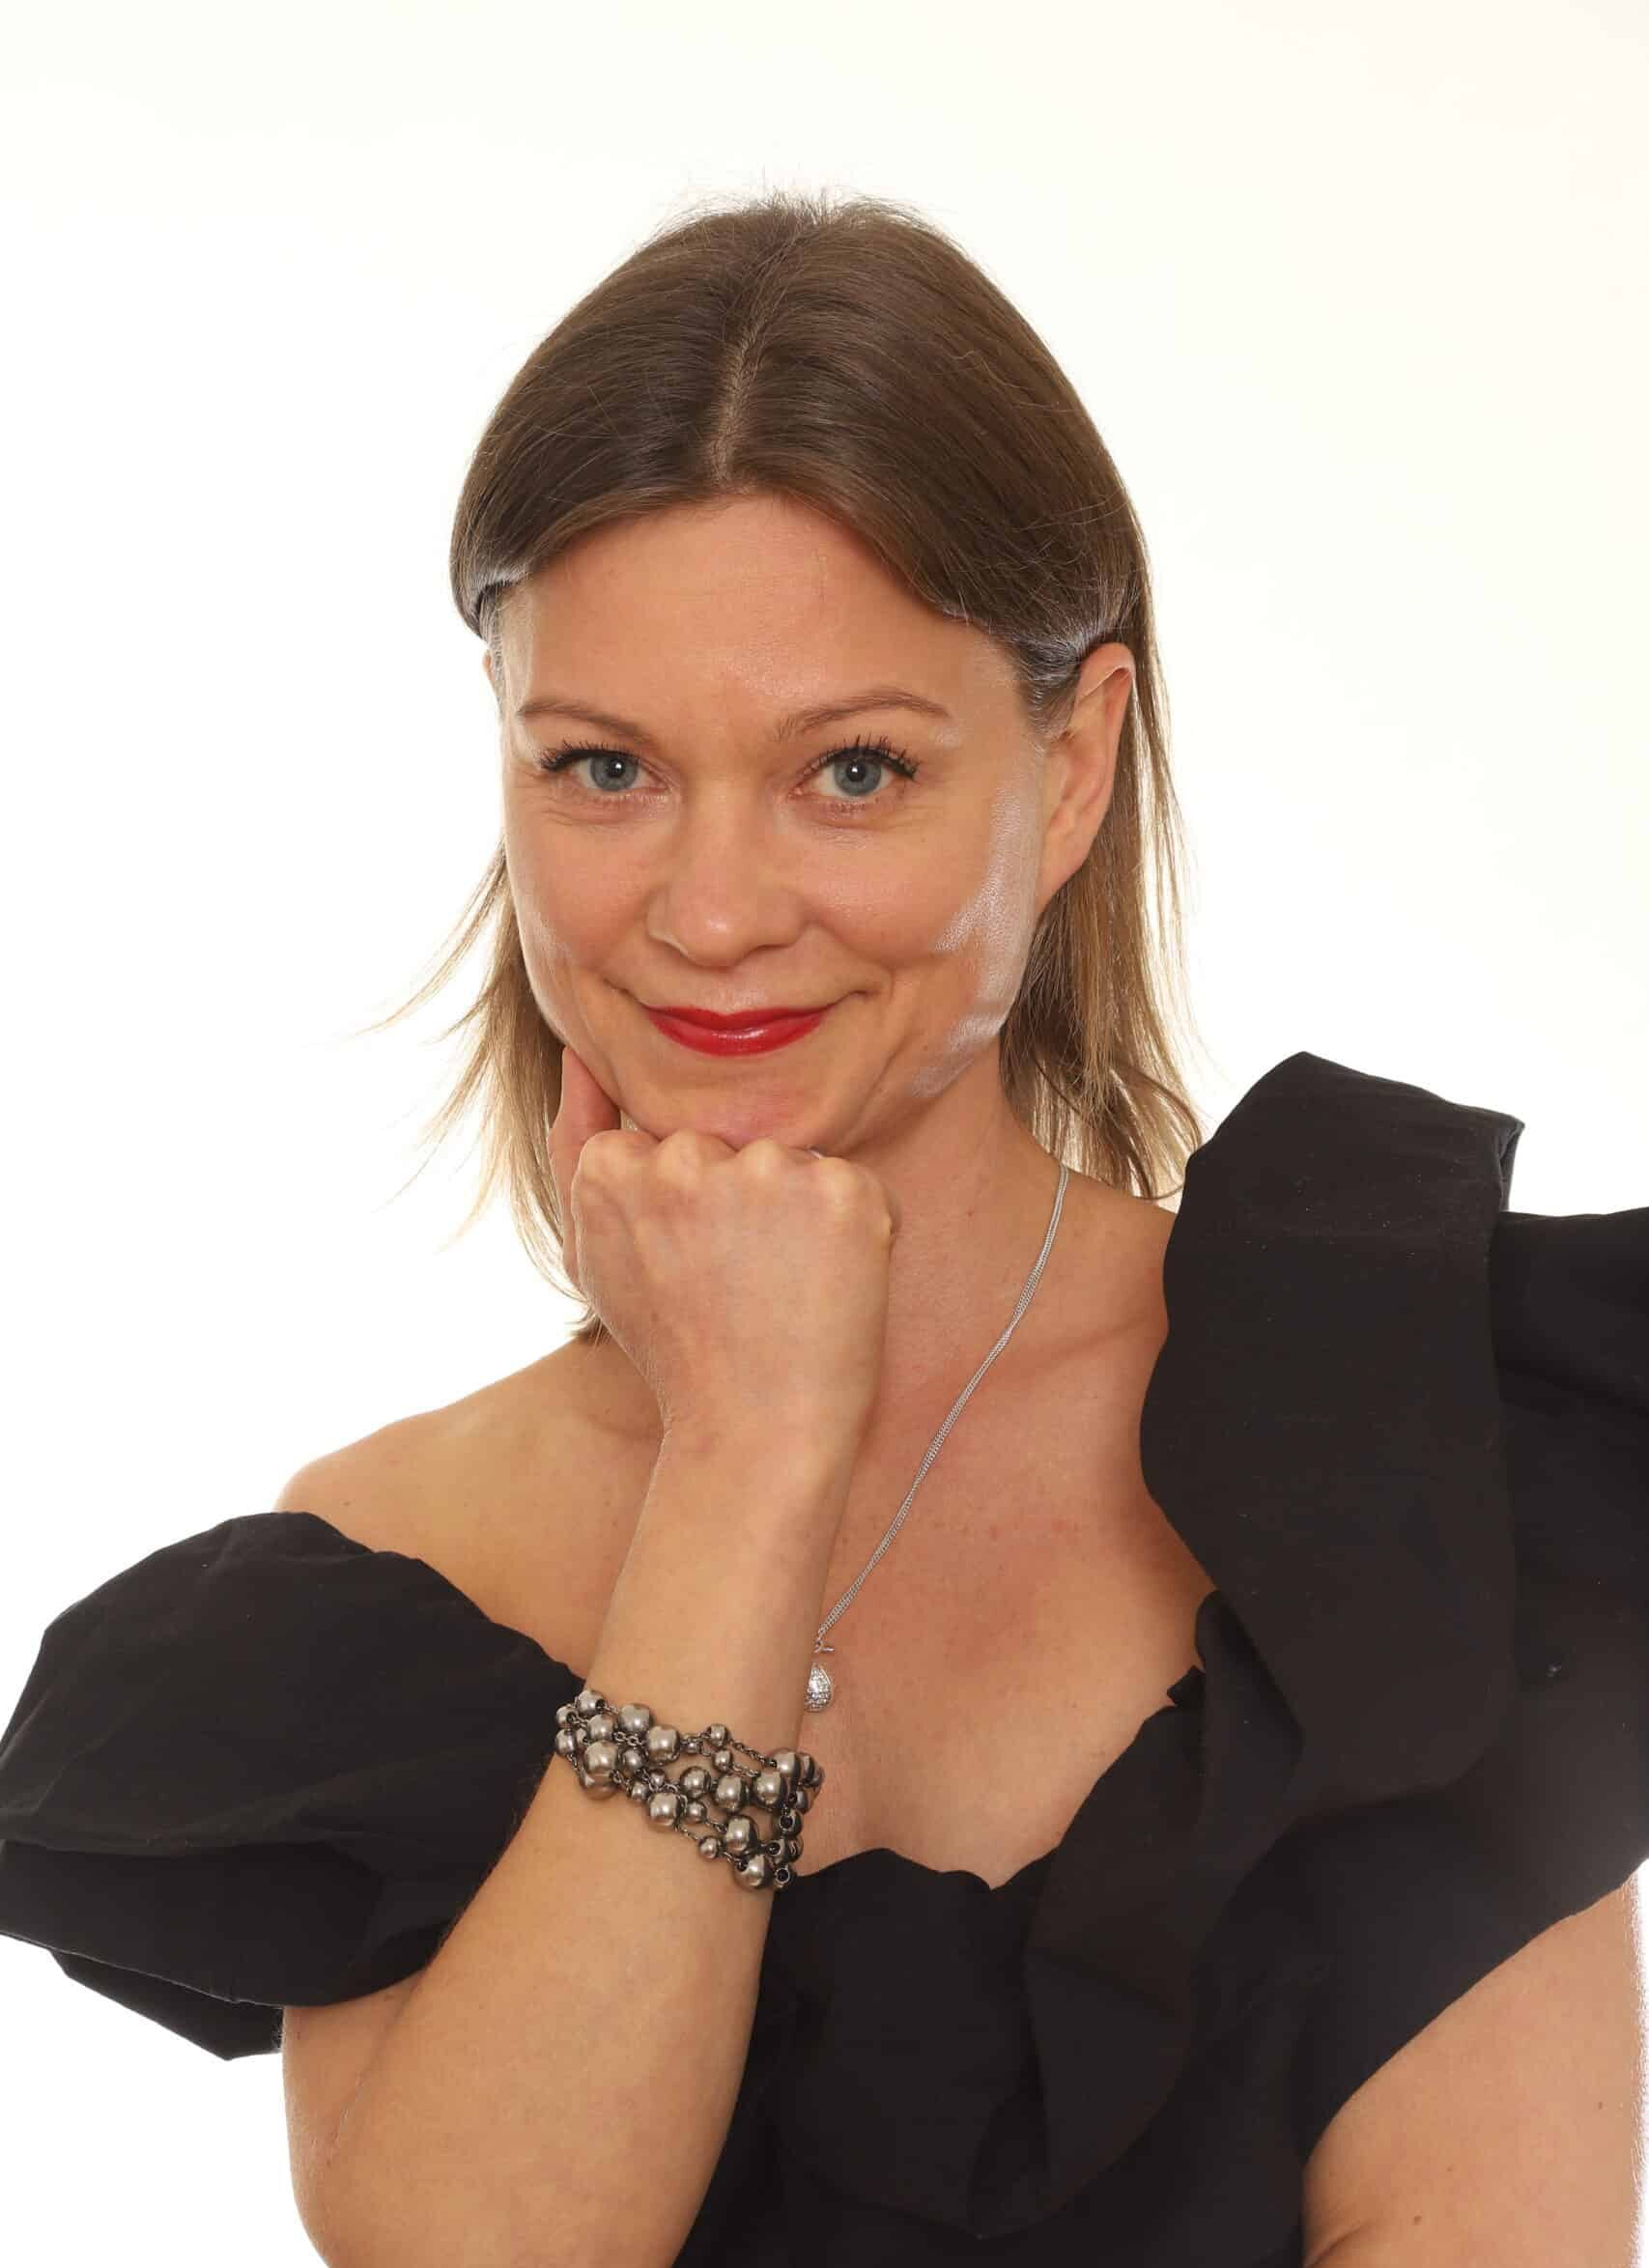 A headshot of the opera singer Petra Valman